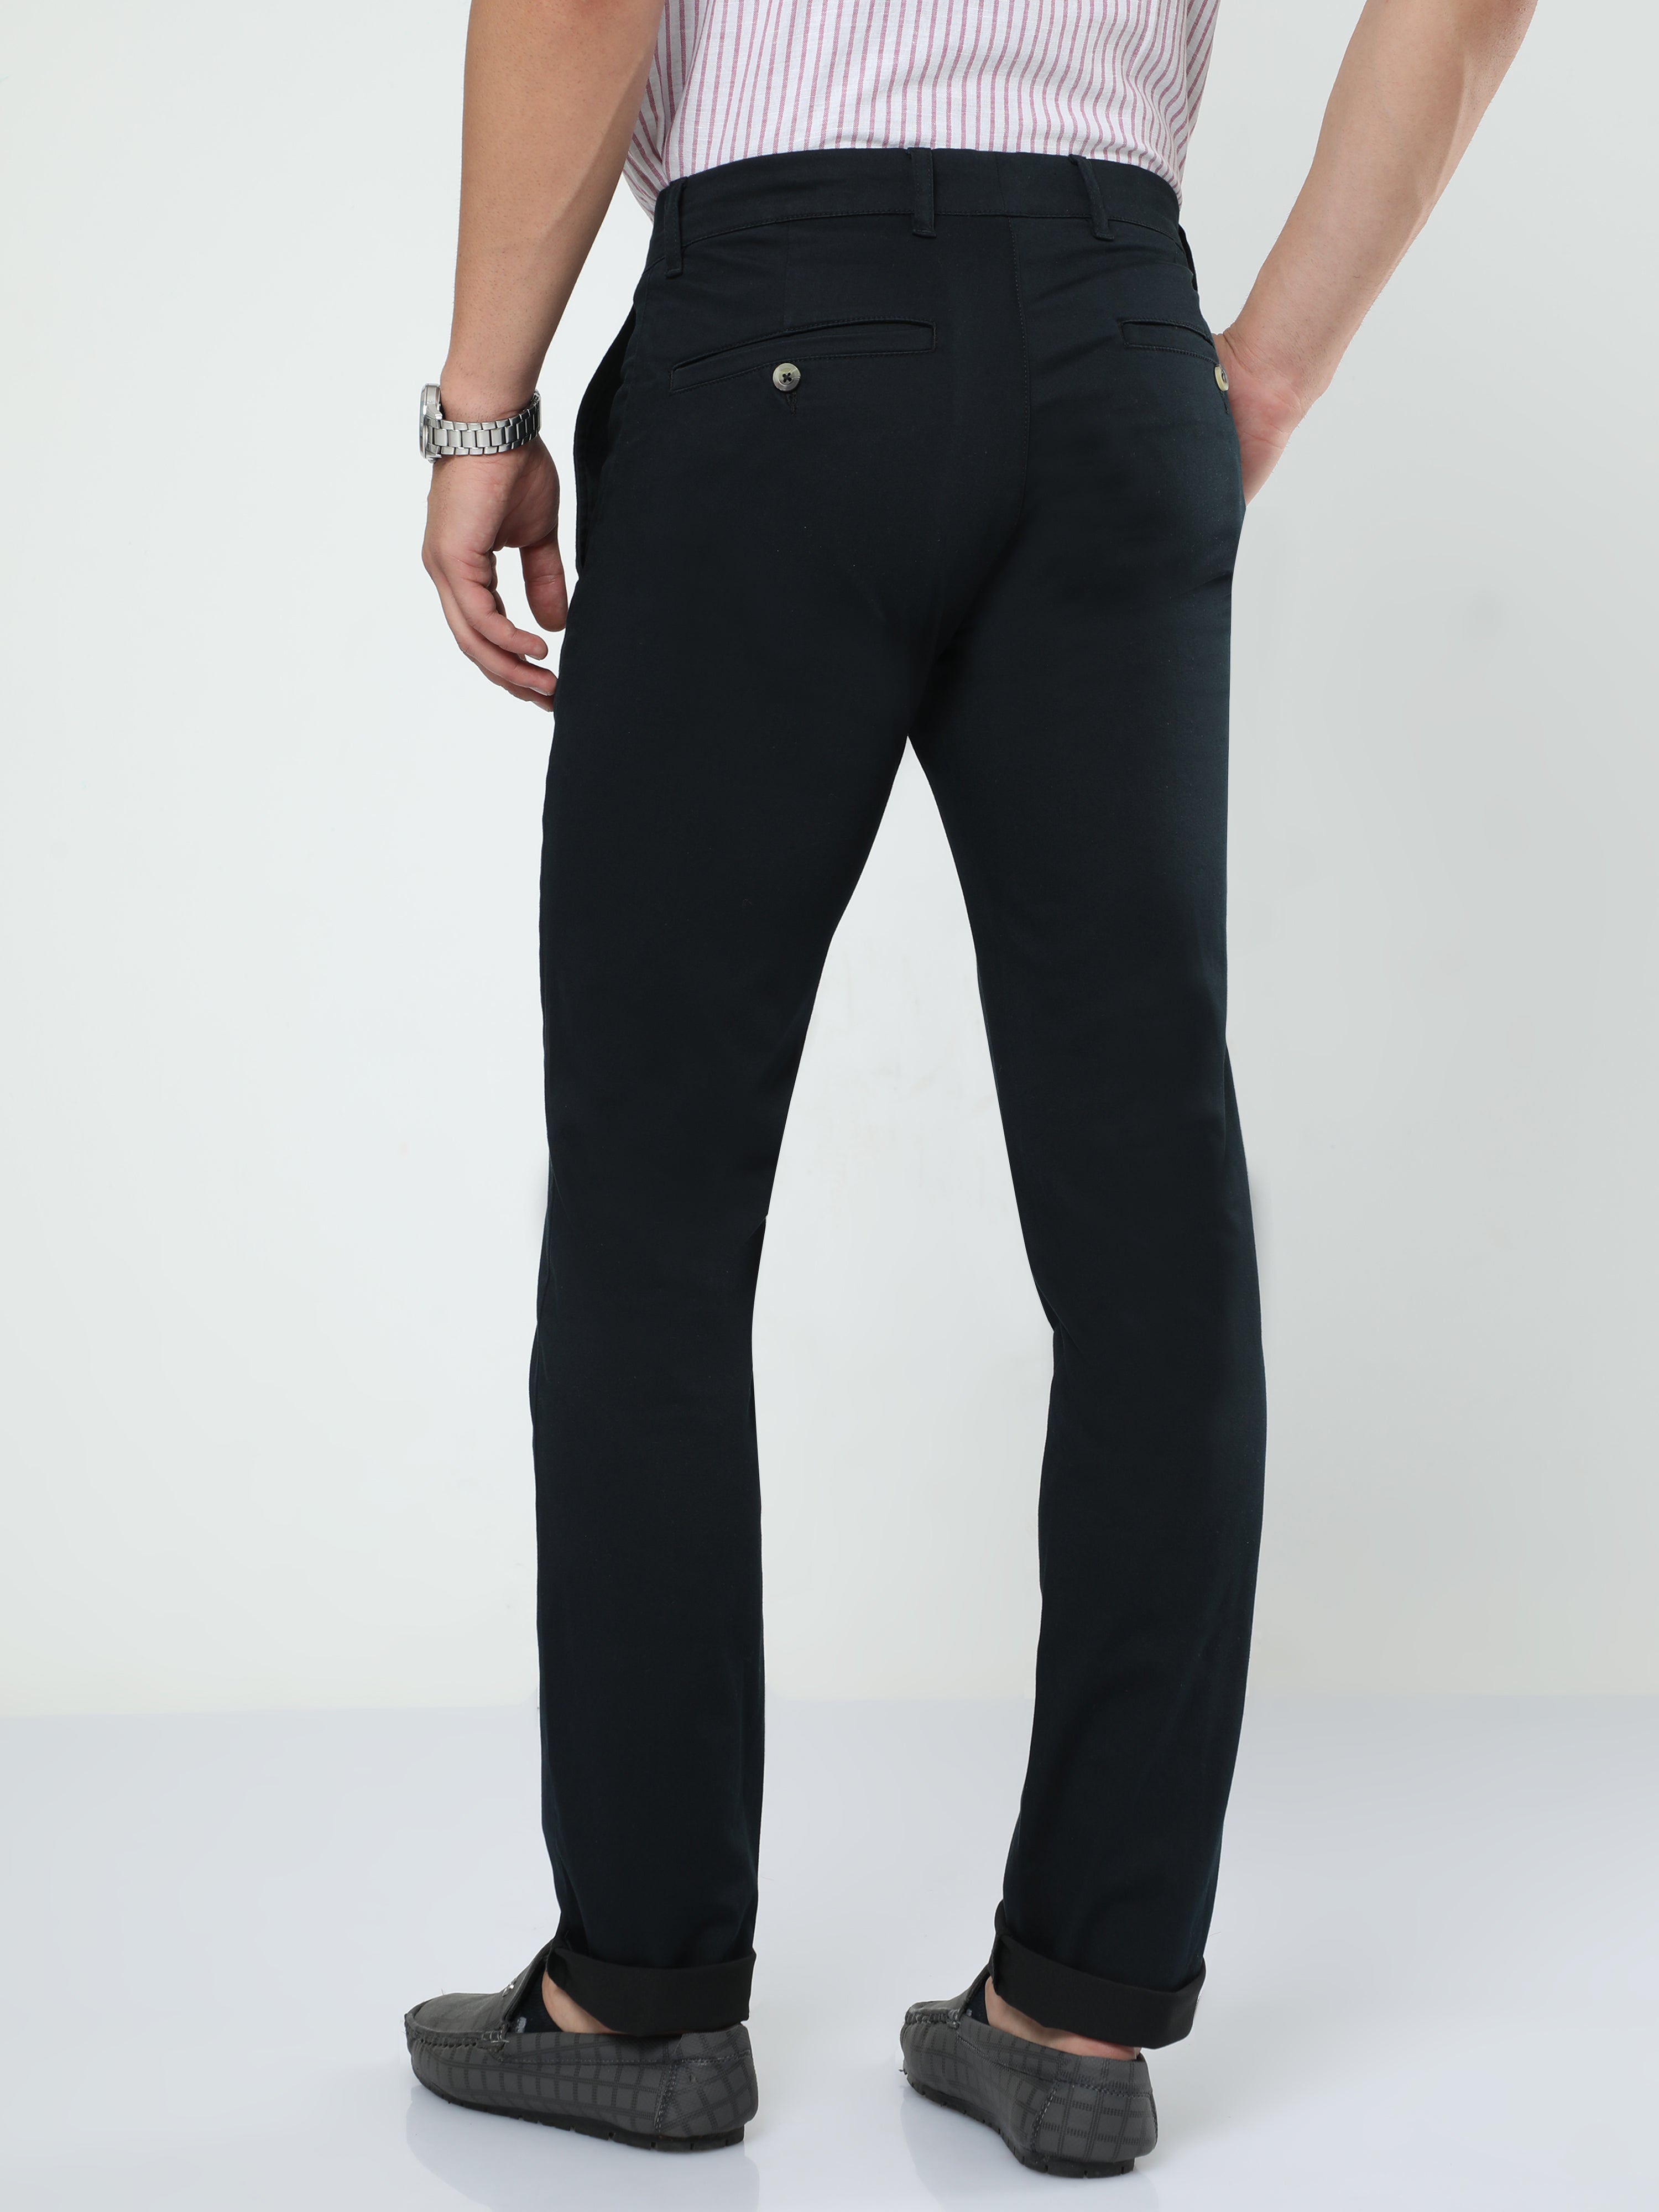 Gap Men's True Black Khakis in Skinny Fit with GapFlex sz 36Wx30L NWT  RRP$100 | eBay